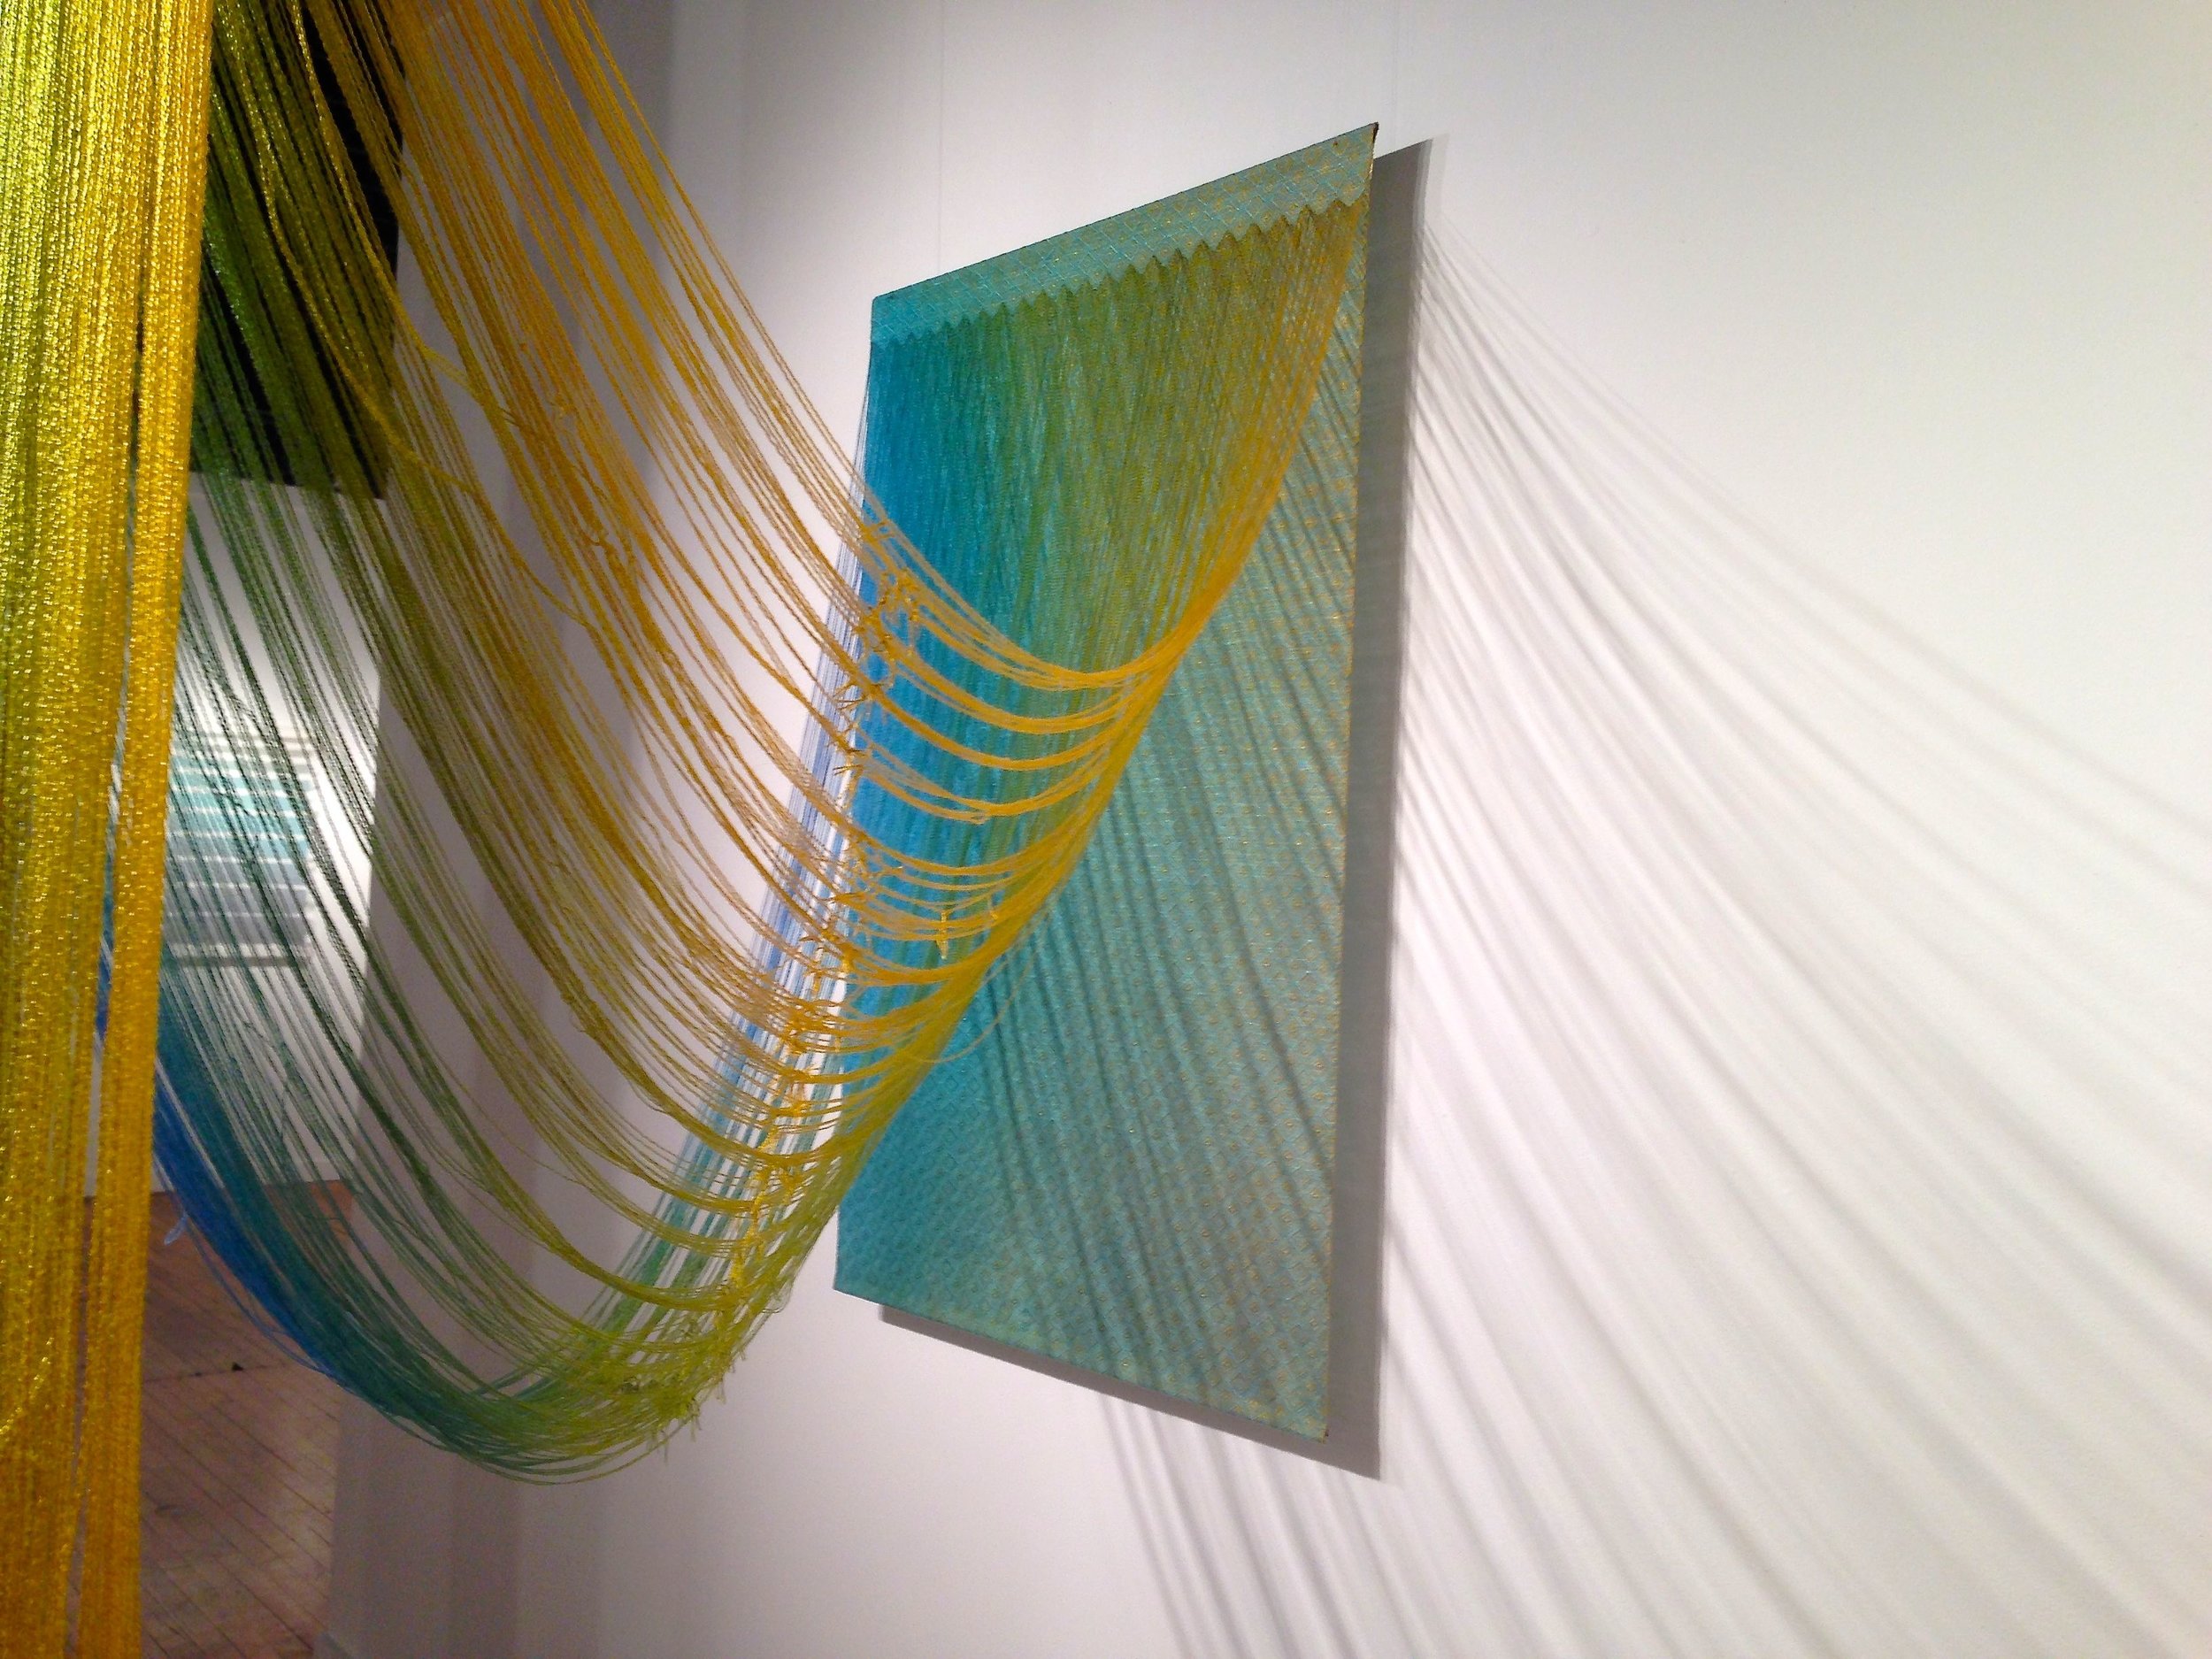  One Thread at a Time; handwoven textiles by Debbie Barrett-Jones   Leedy-Voulkos Art Center   Kansas City, MO 